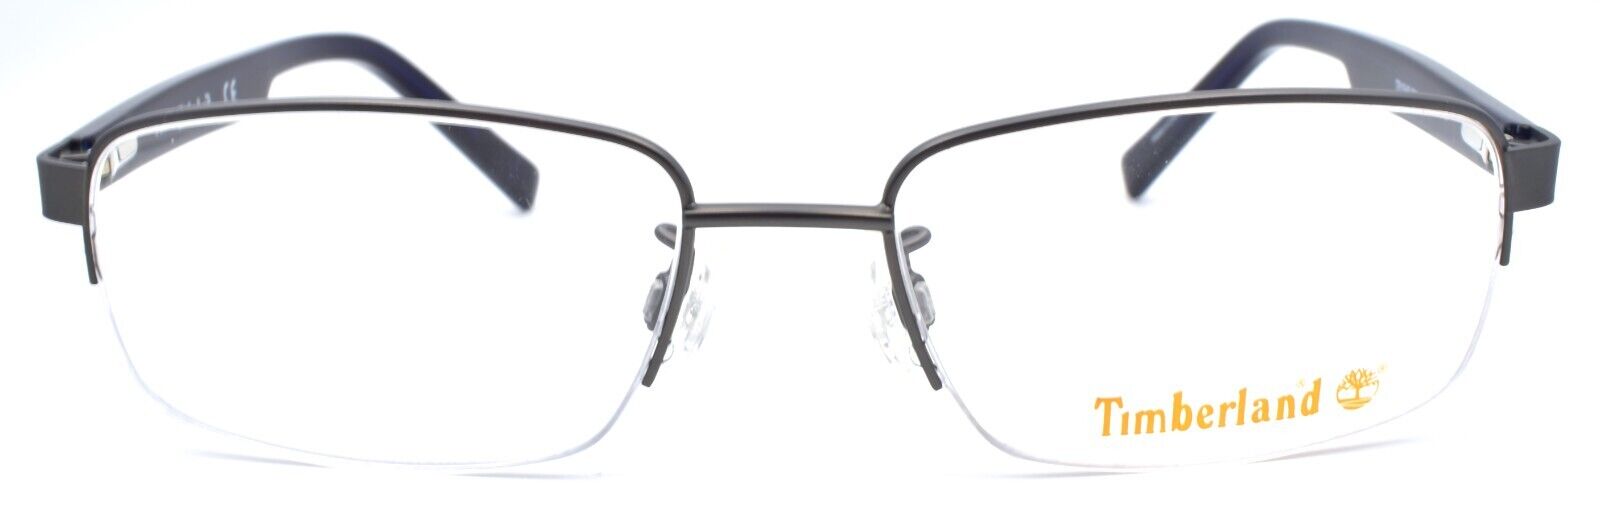 2-TIMBERLAND TB1548 009 Men's Eyeglasses Frames Half-rim 53-17-140 Matte Gunmetal-664689750054-IKSpecs